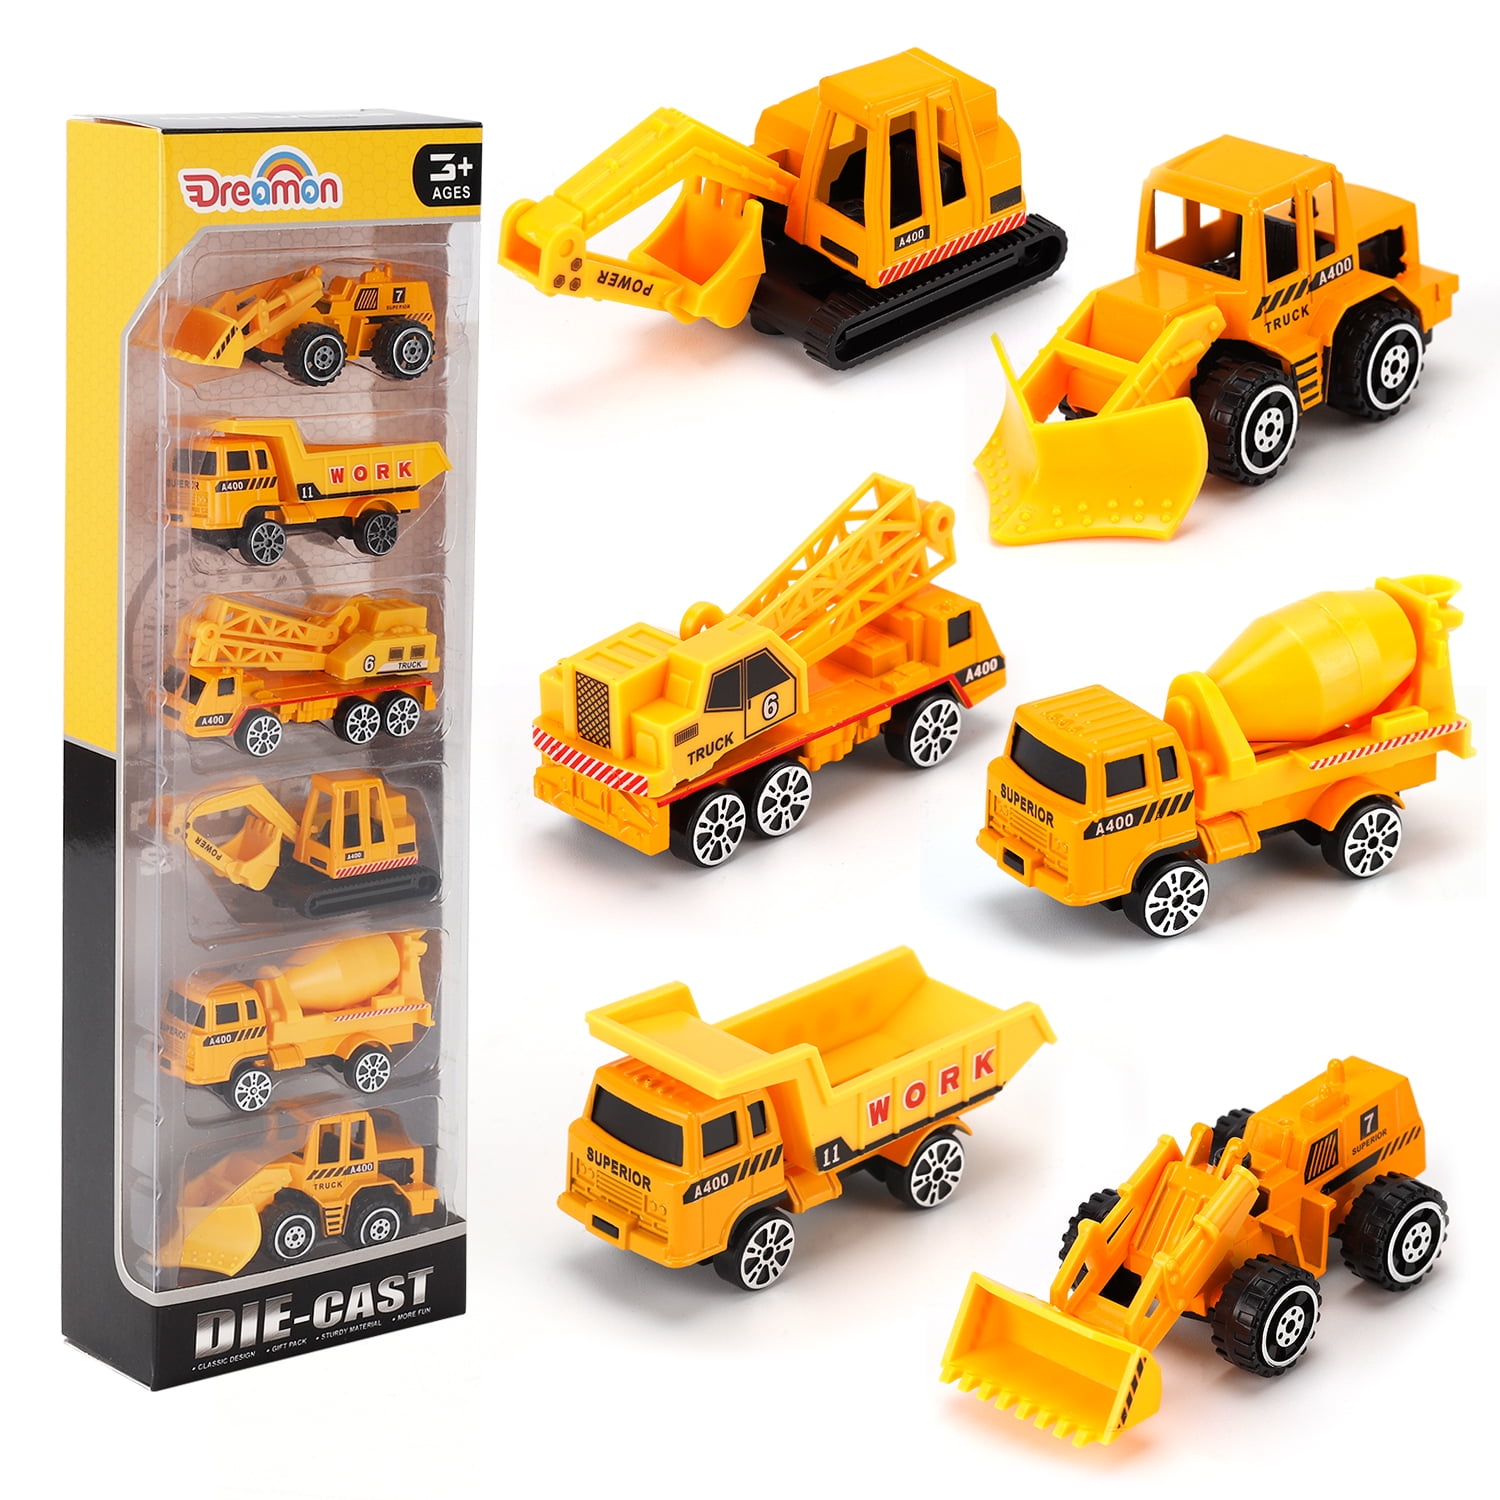 6 Pcs Play Trucks Toy Construction Kids Construction Toys Kids Birthday Gifts 